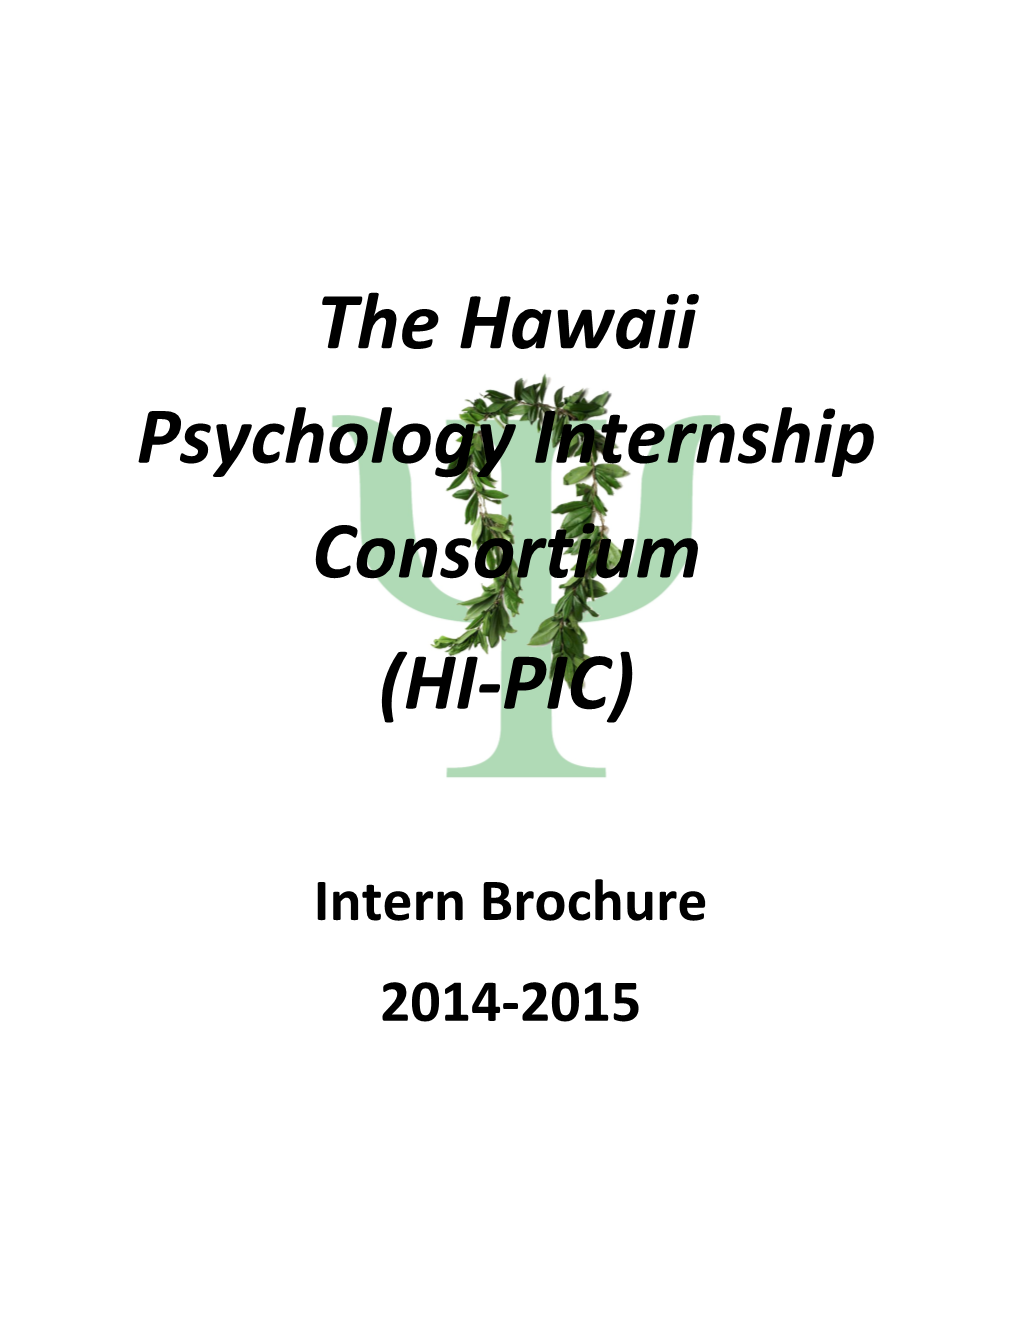 The Alaska Psychology Internship Consortium